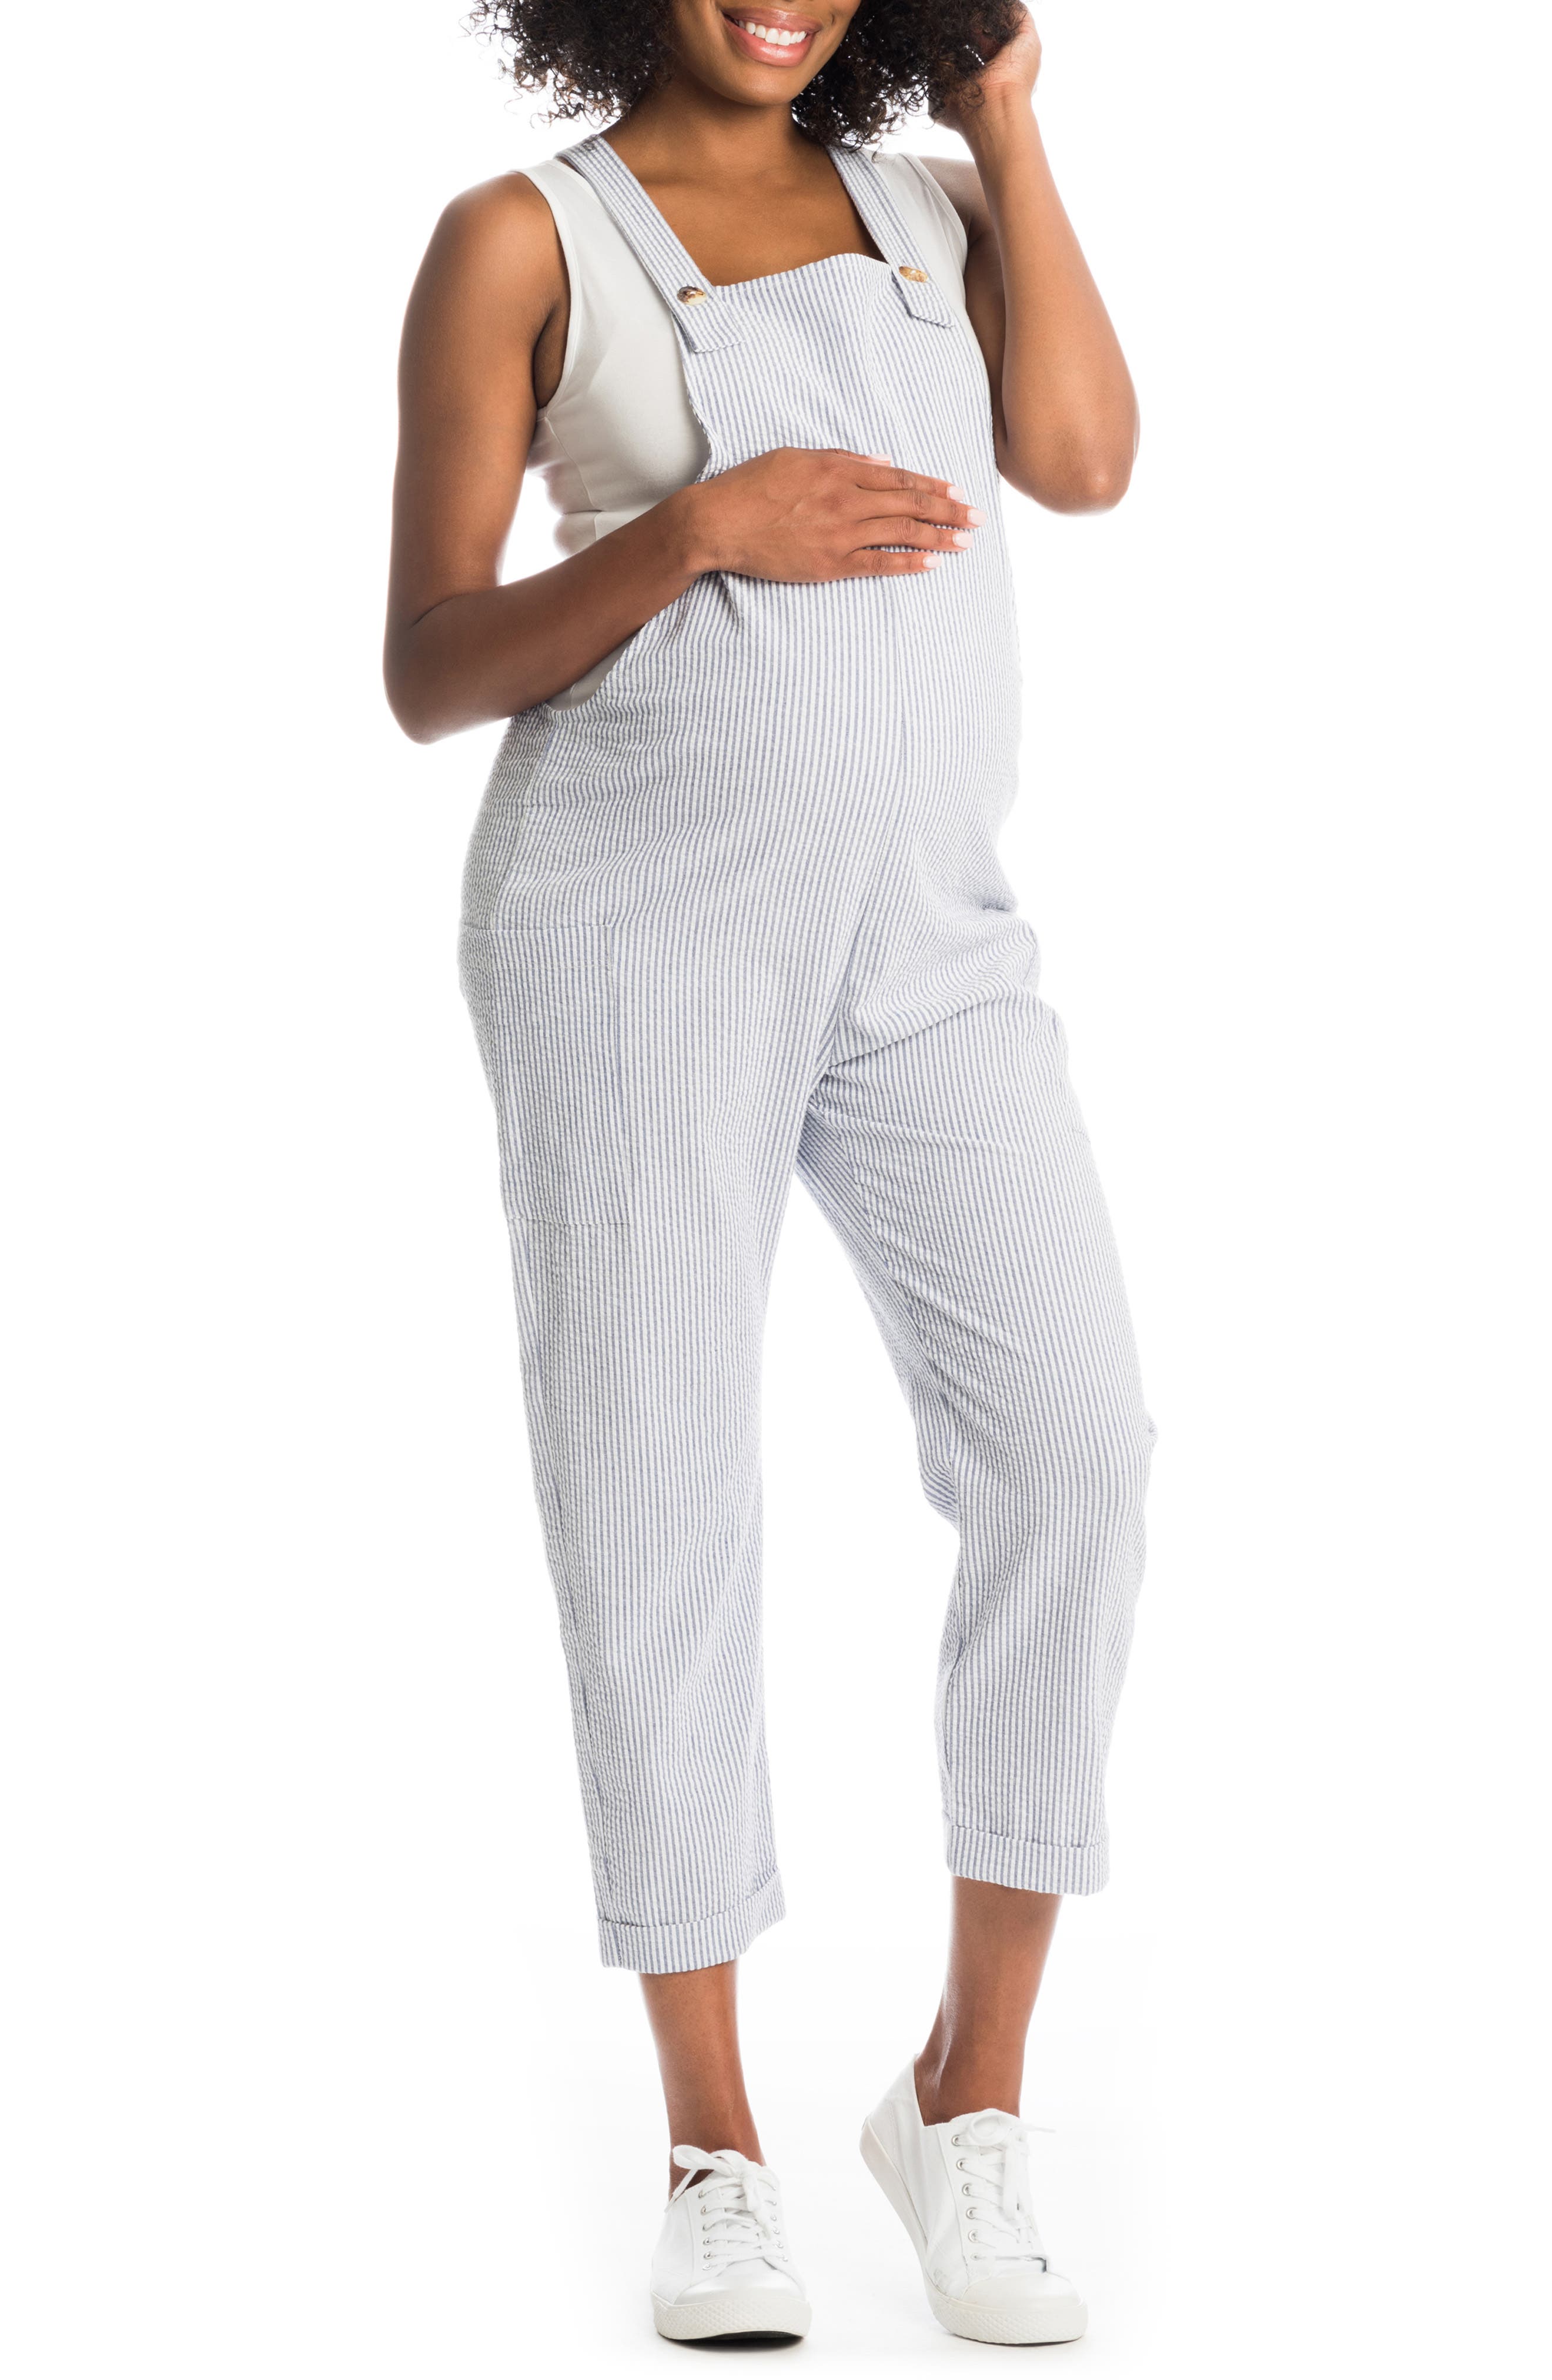 NoName jumpsuit discount 93% White/Beige S WOMEN FASHION Baby Jumpsuits & Dungarees Party Jumpsuit 